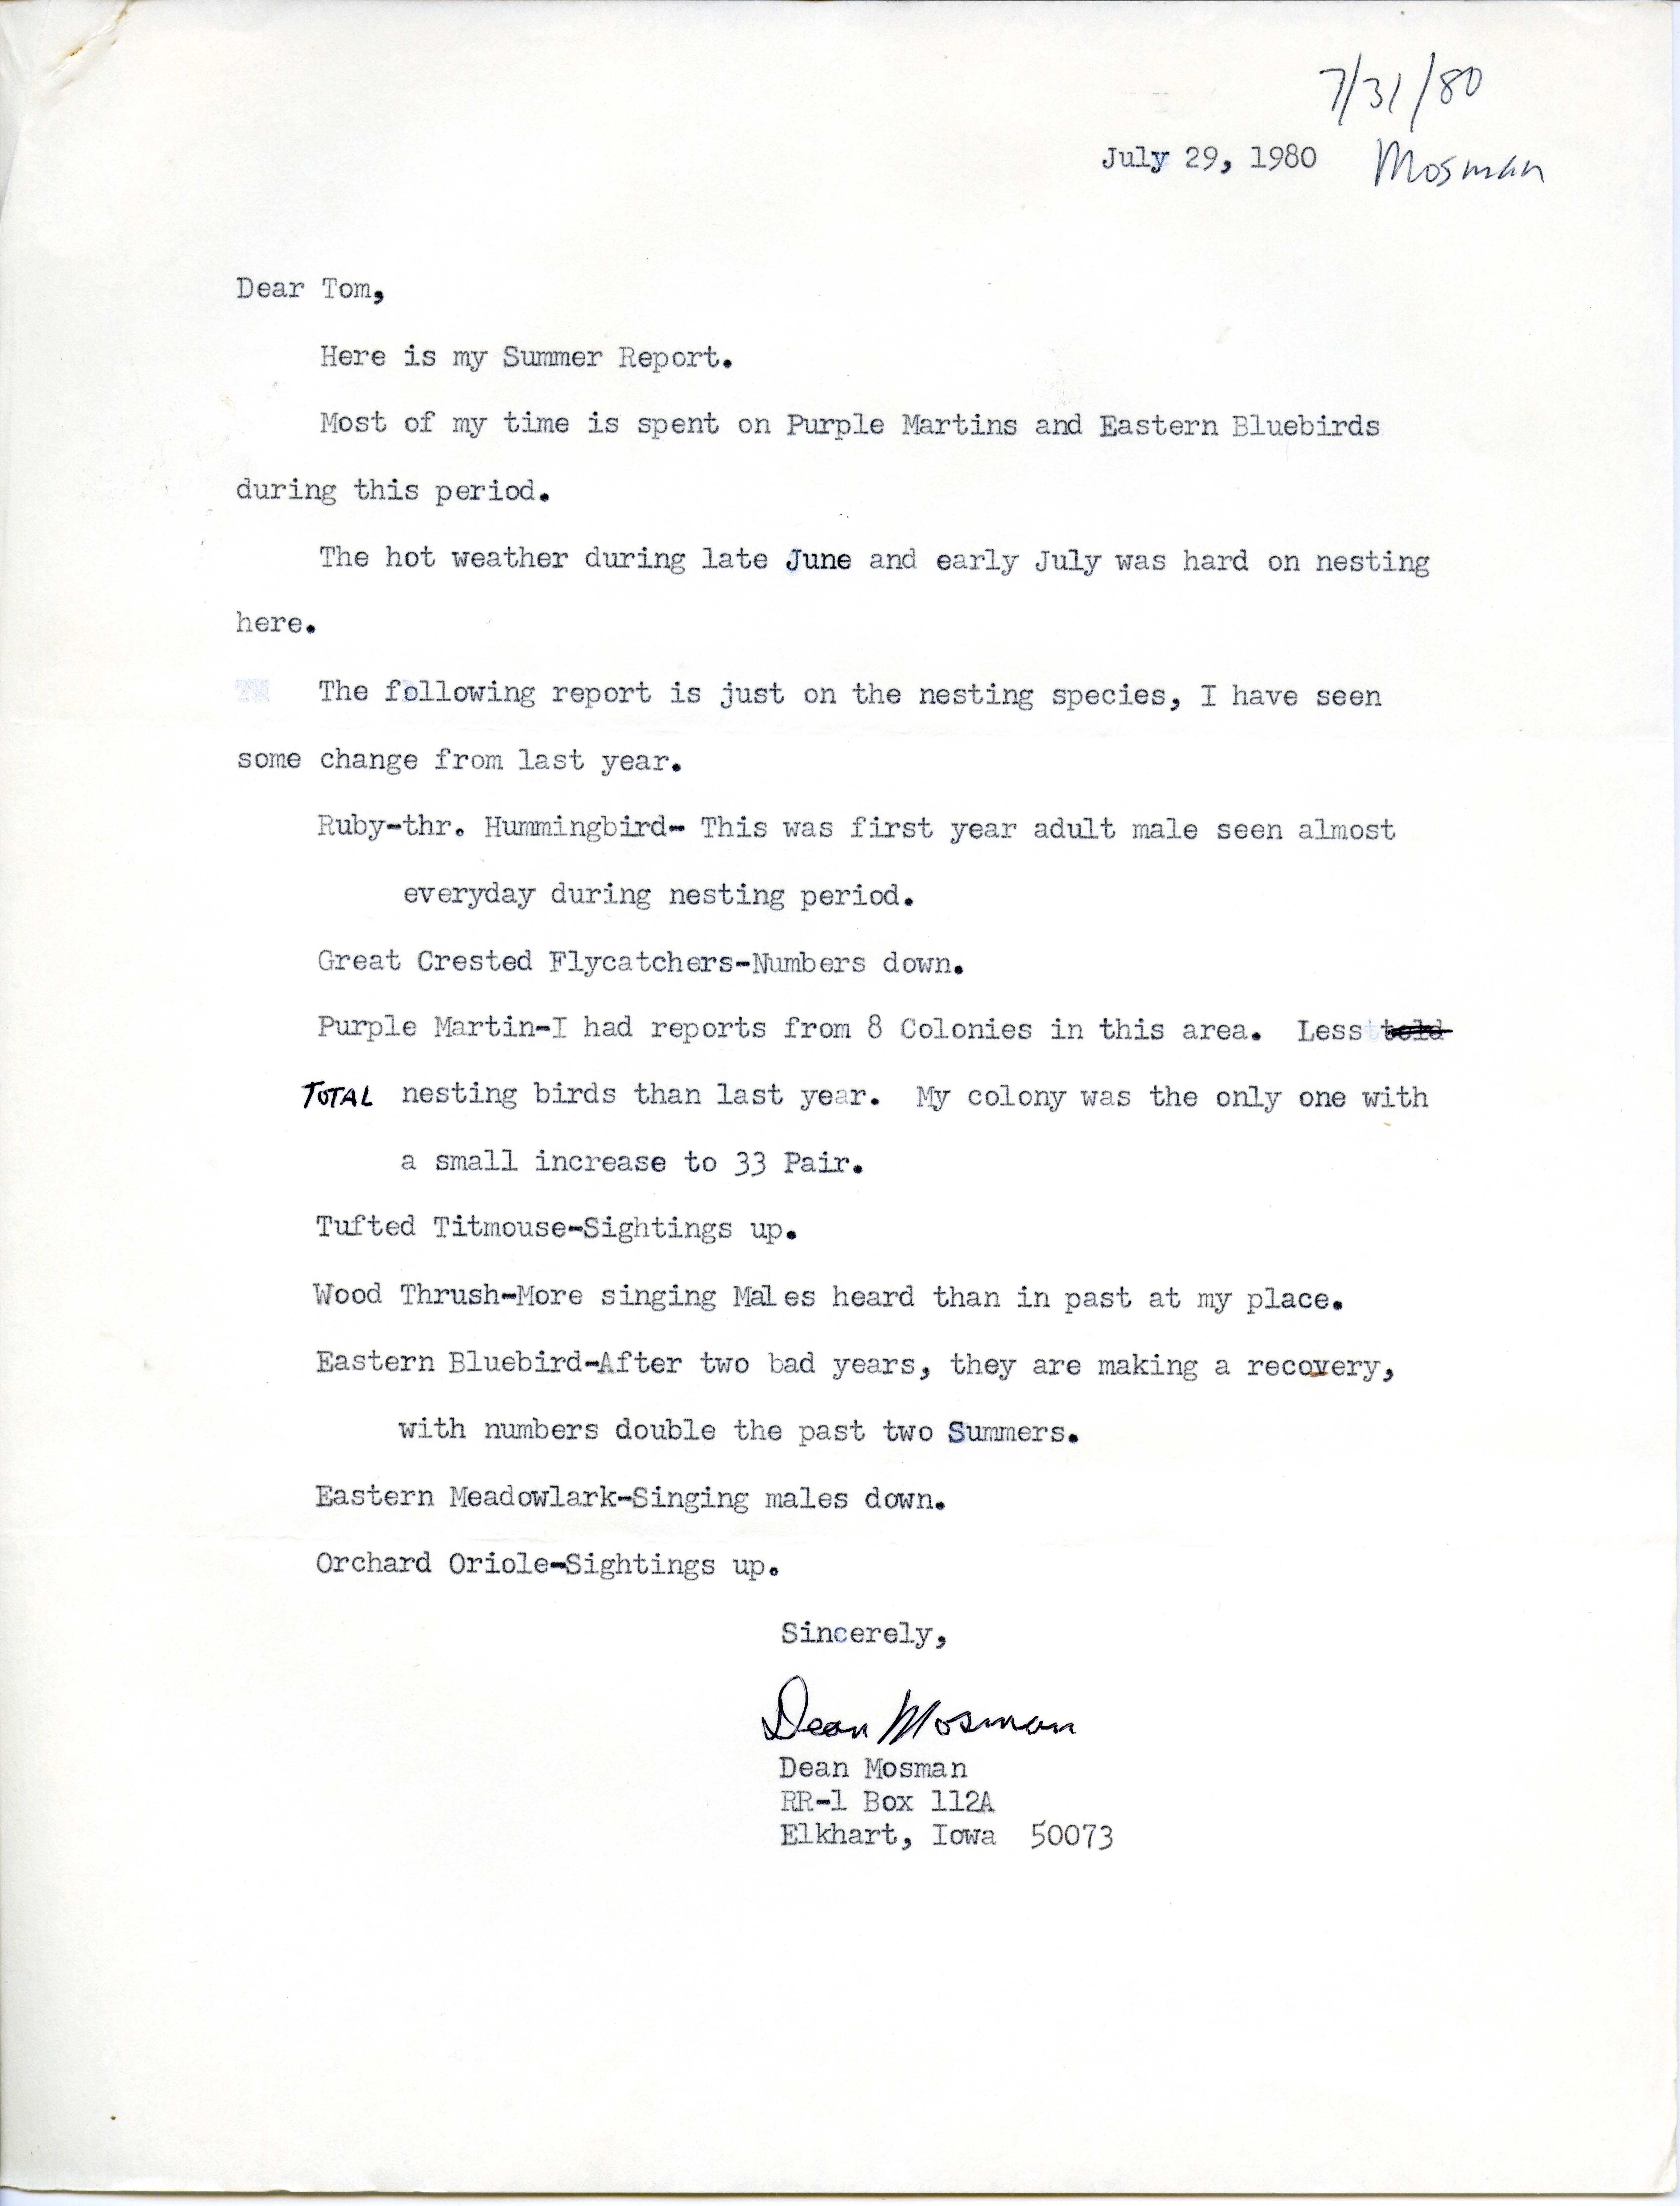 Dean Mosman letter to Thomas H. Kent regarding bird sightings, July 29, 1980